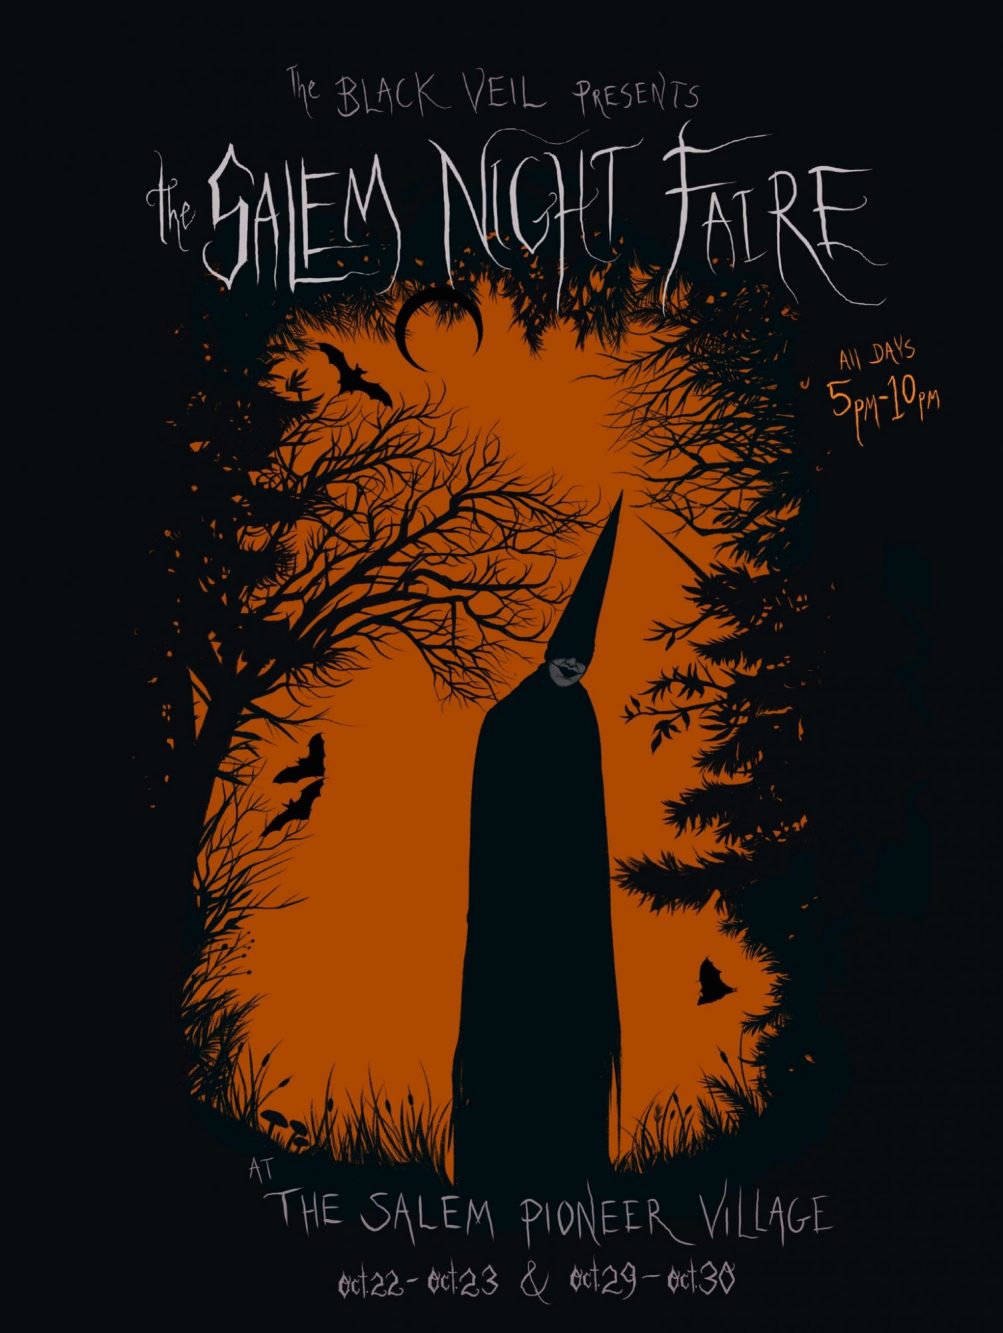 The Salem Night Faire flyer